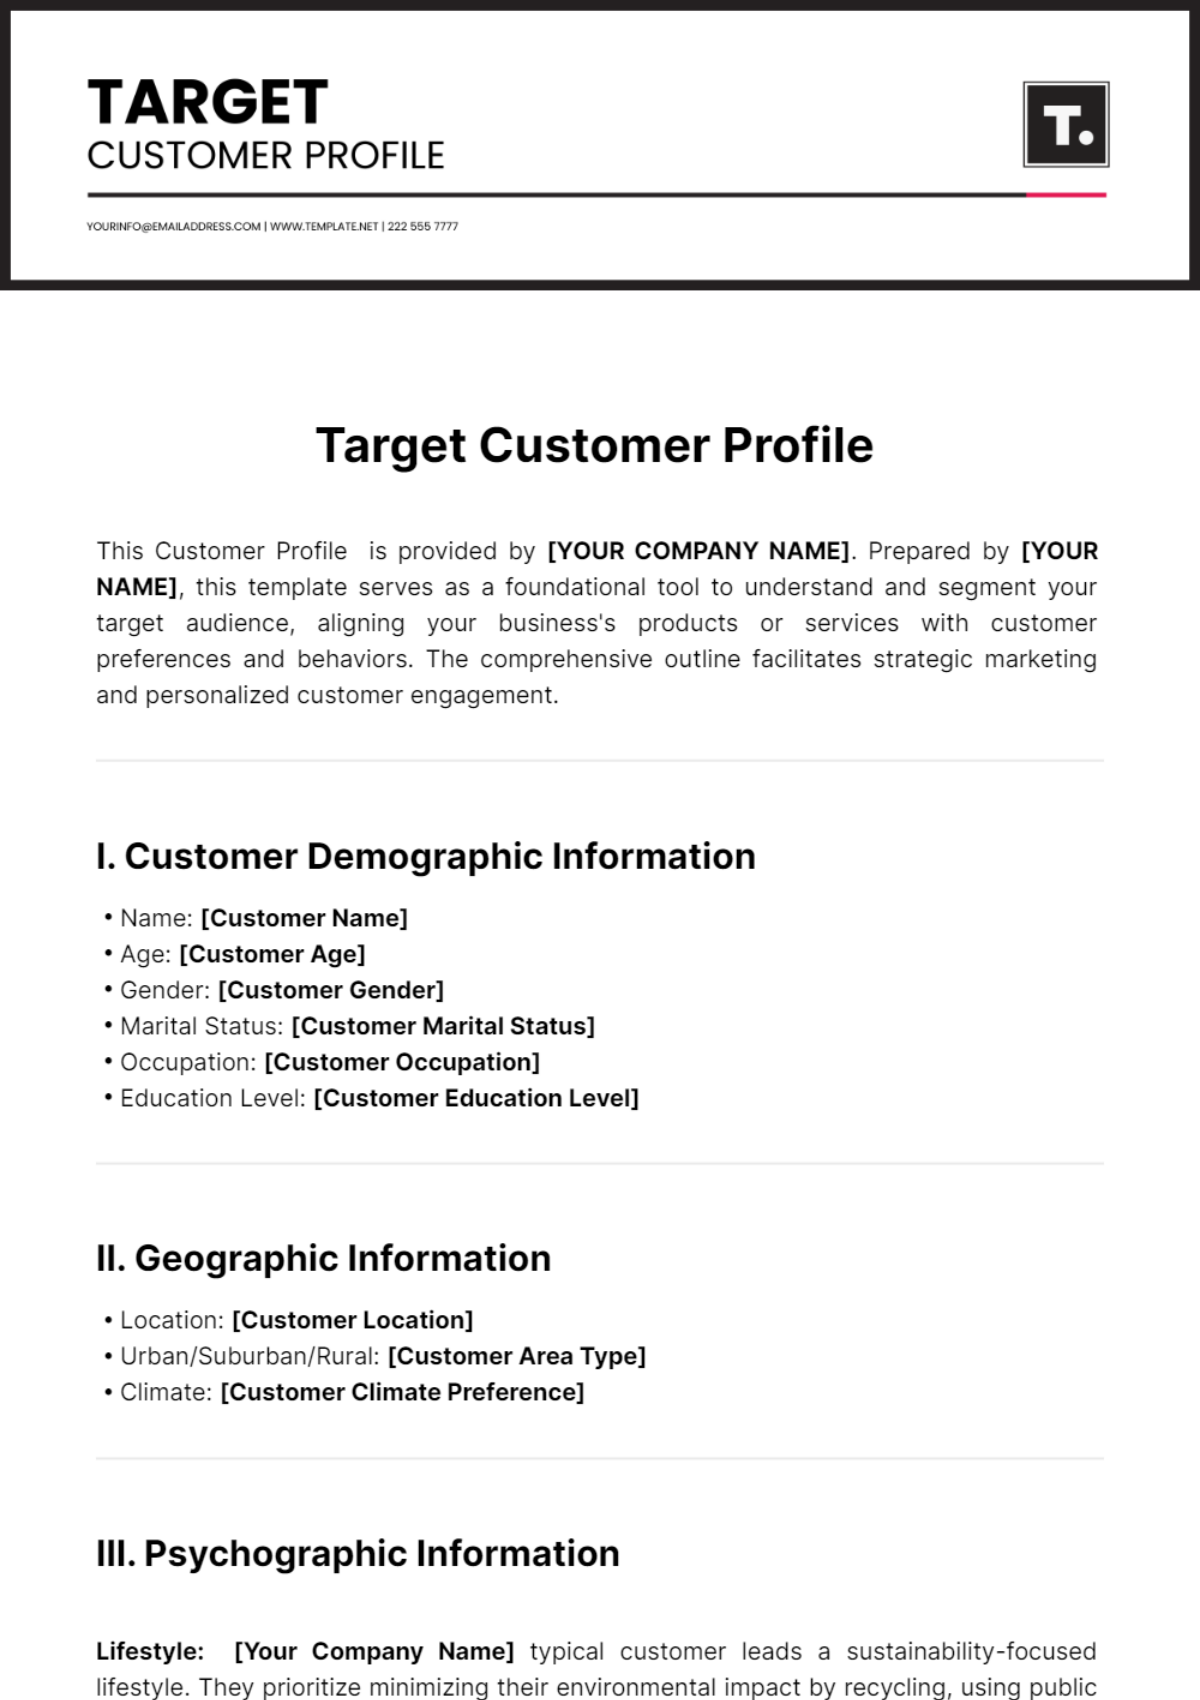 Target Customer Profile Template